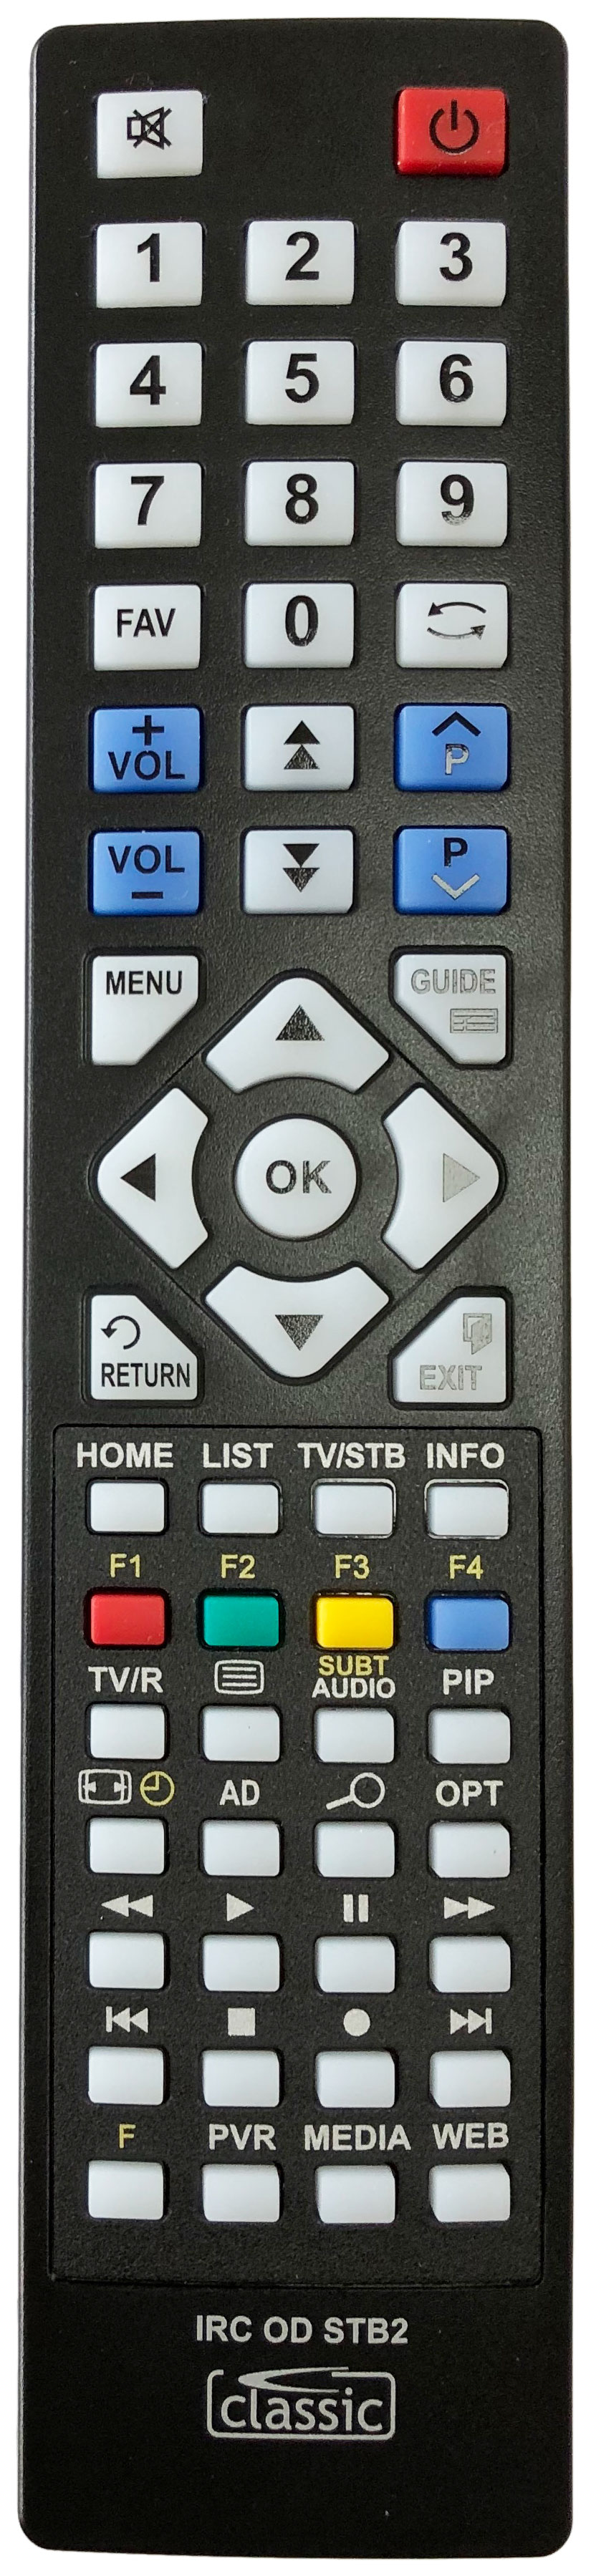 HUMAX VACI-5350 Remote Control